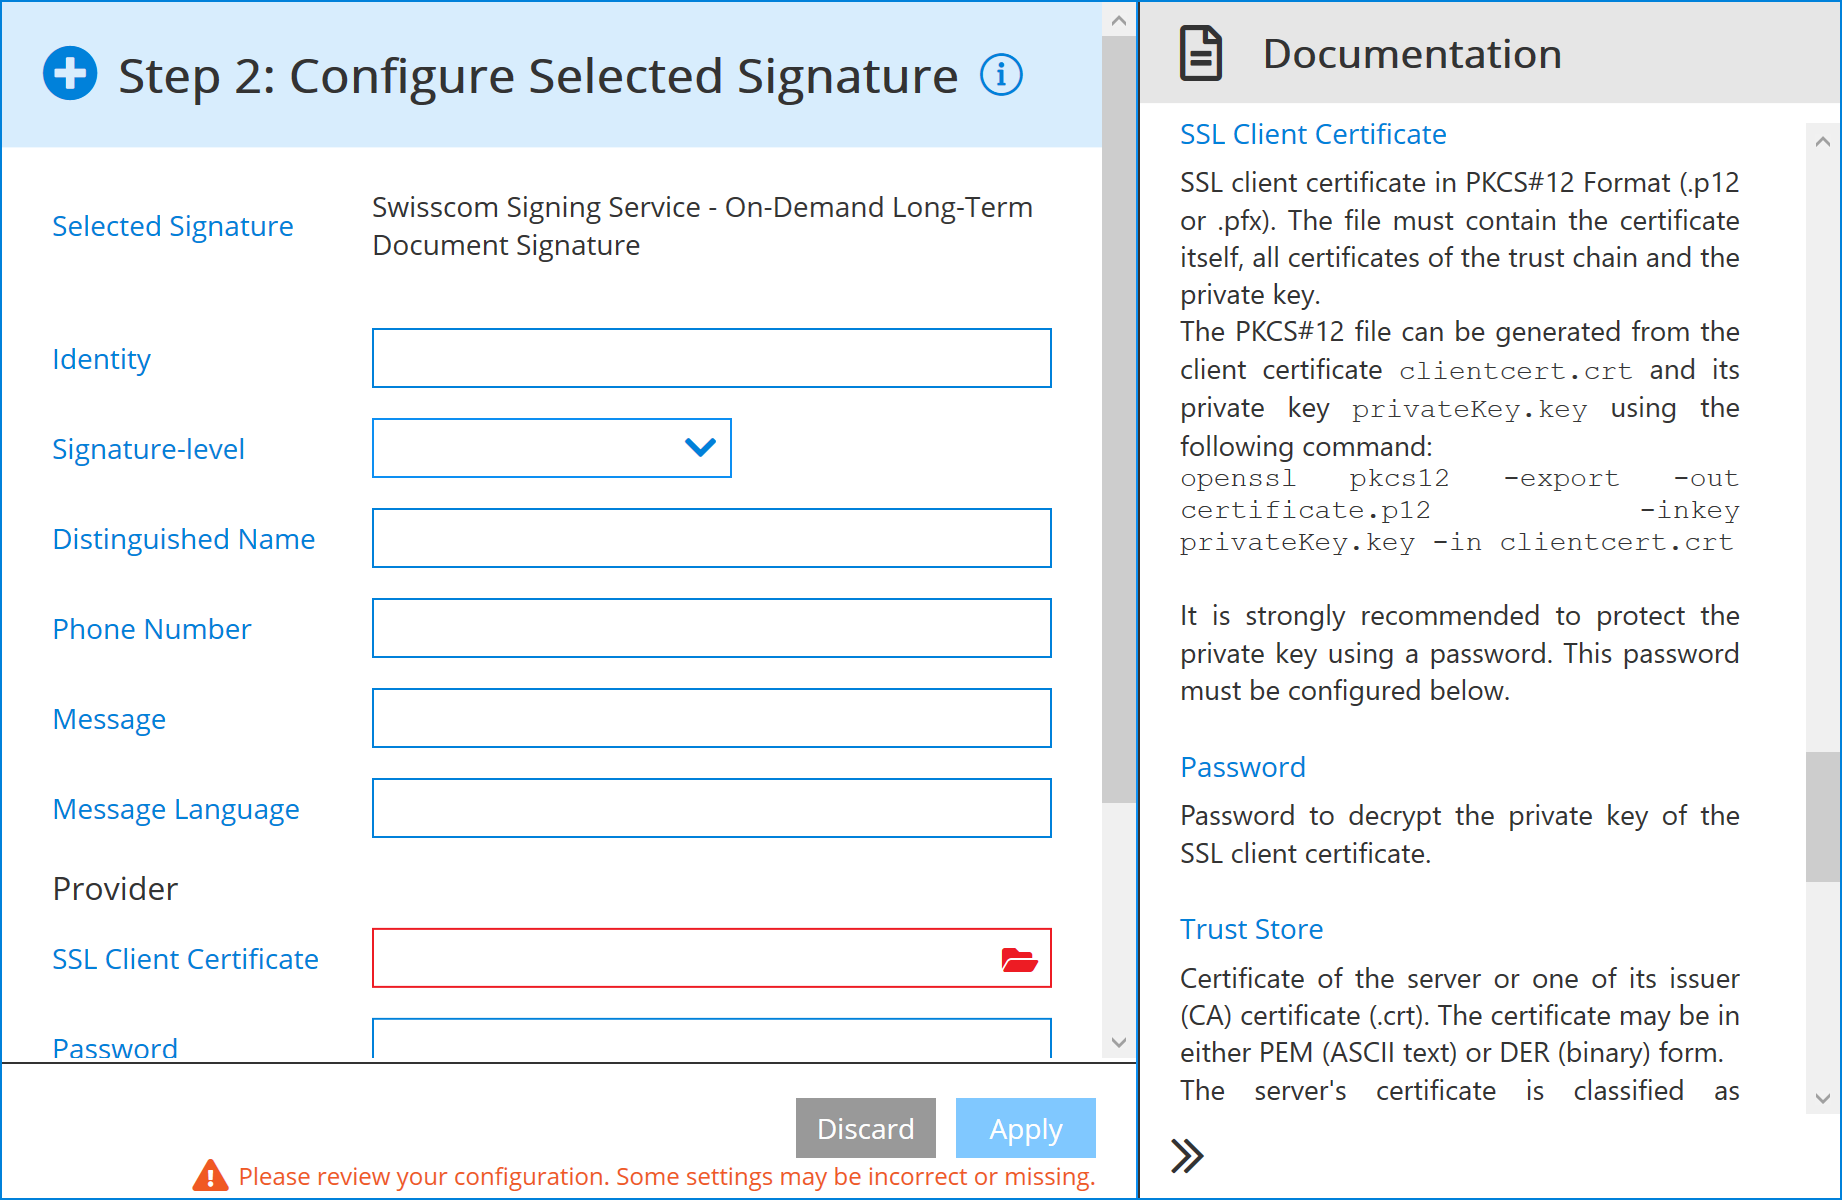 Swisscom signature configuration help text from the Configurator